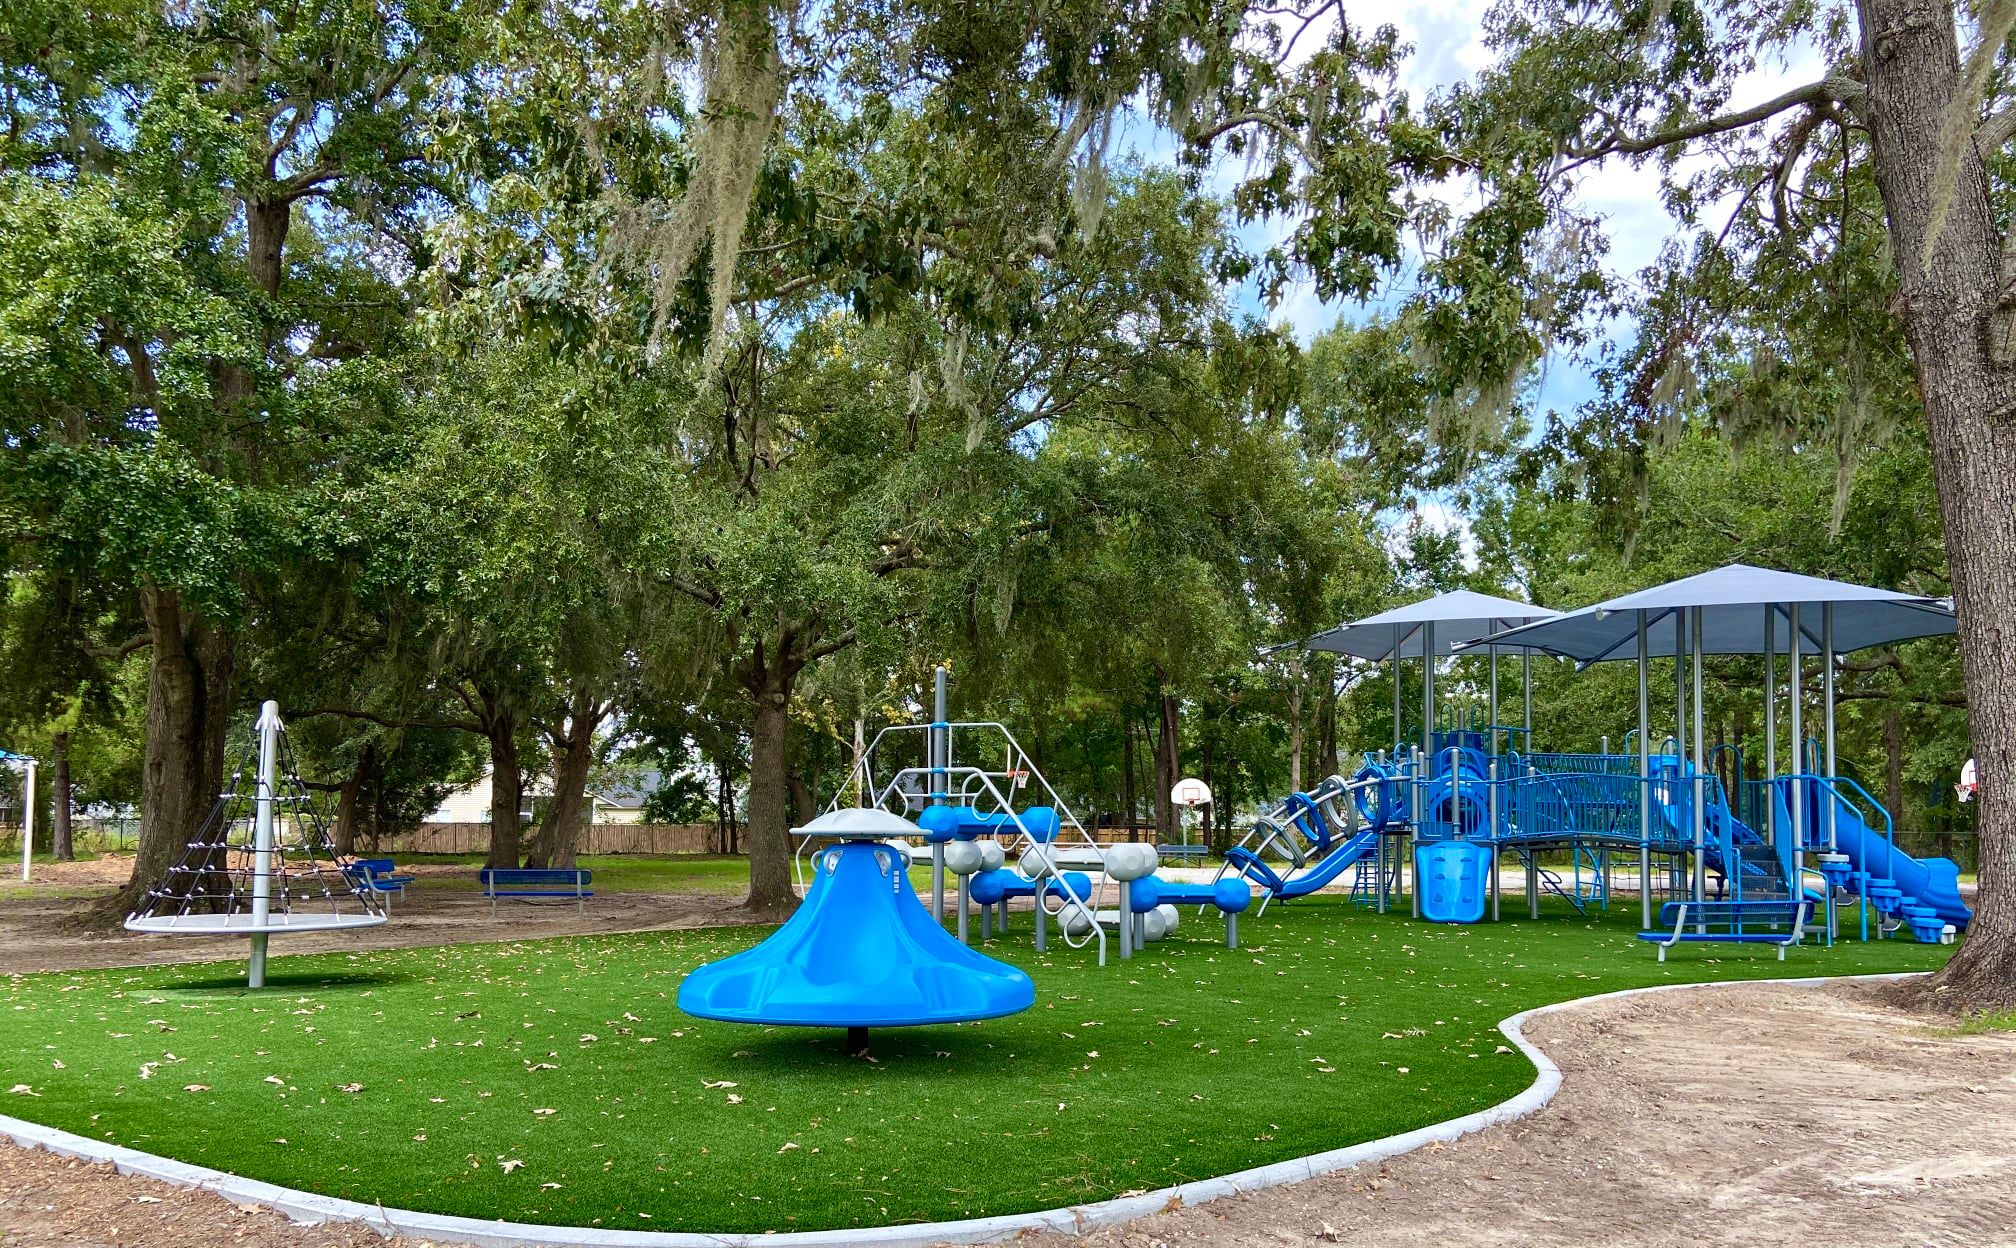 Churchich playground at a park